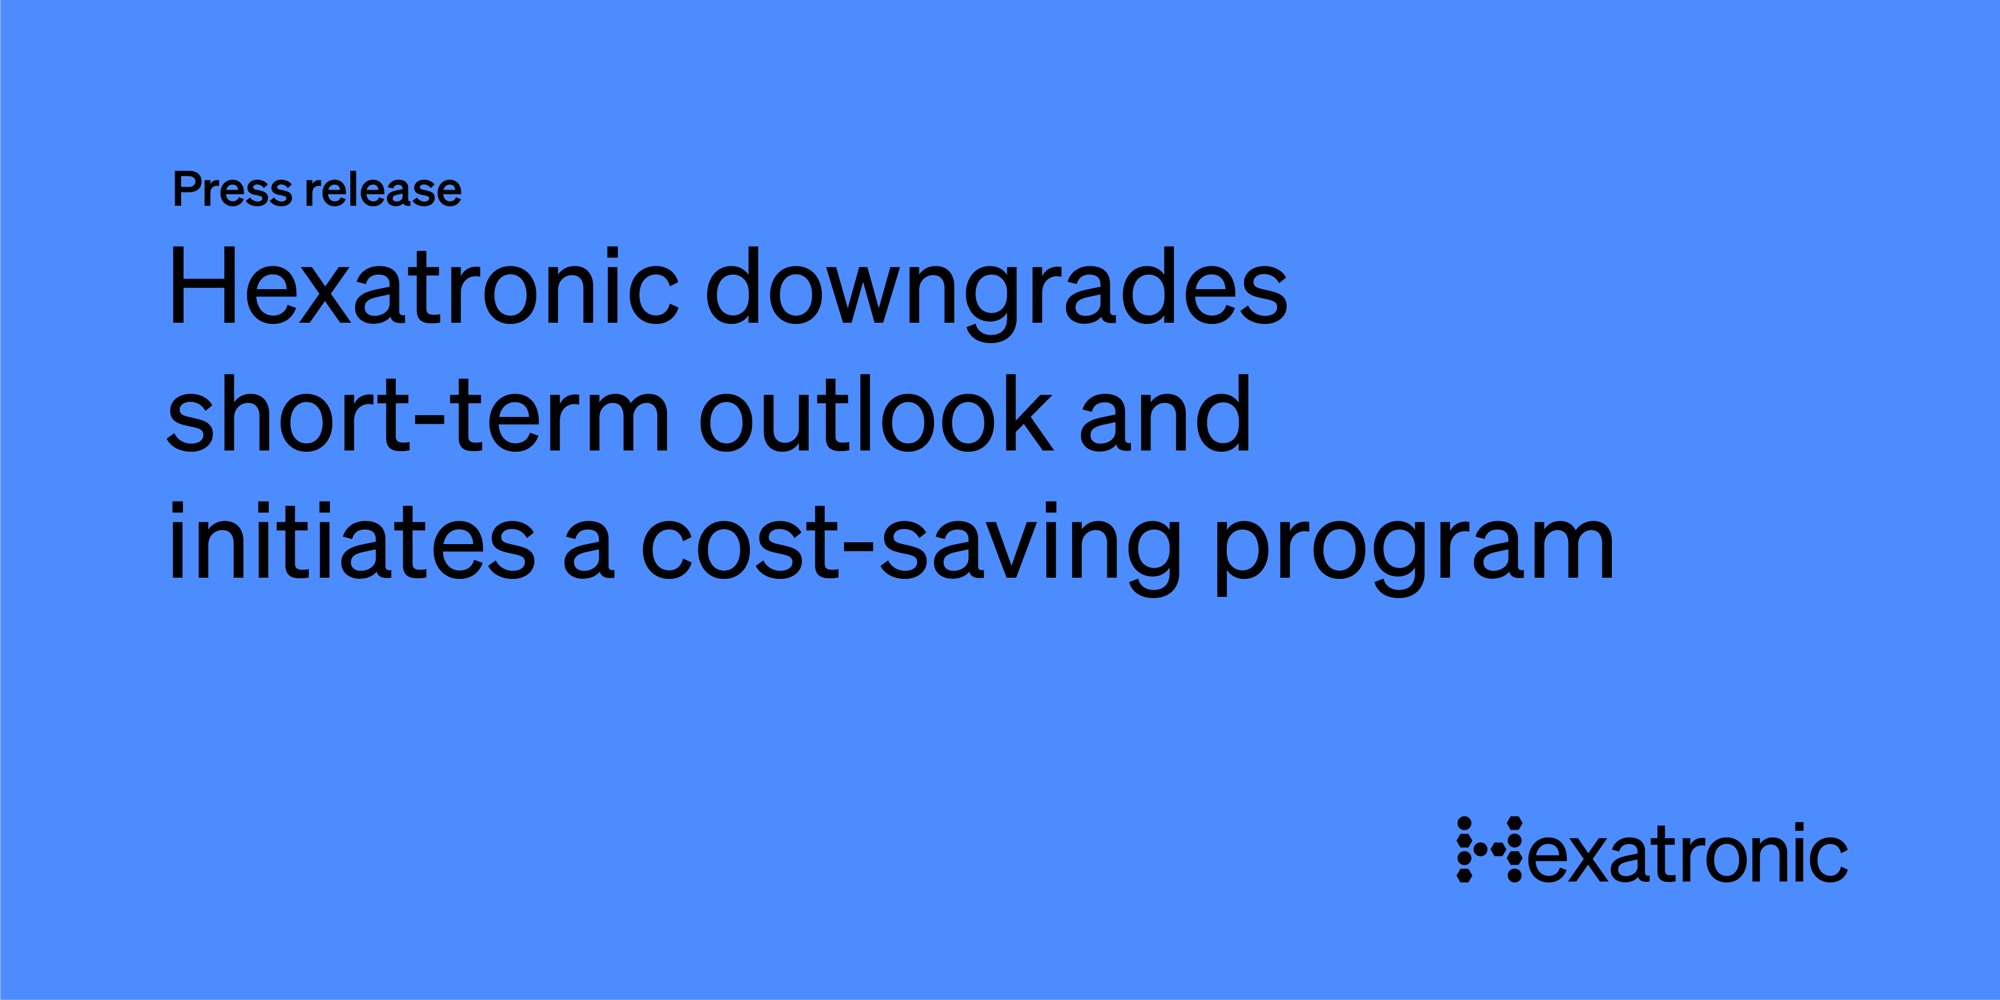 Hexatronic downgrades short-term outlook and initiates a cost-saving program